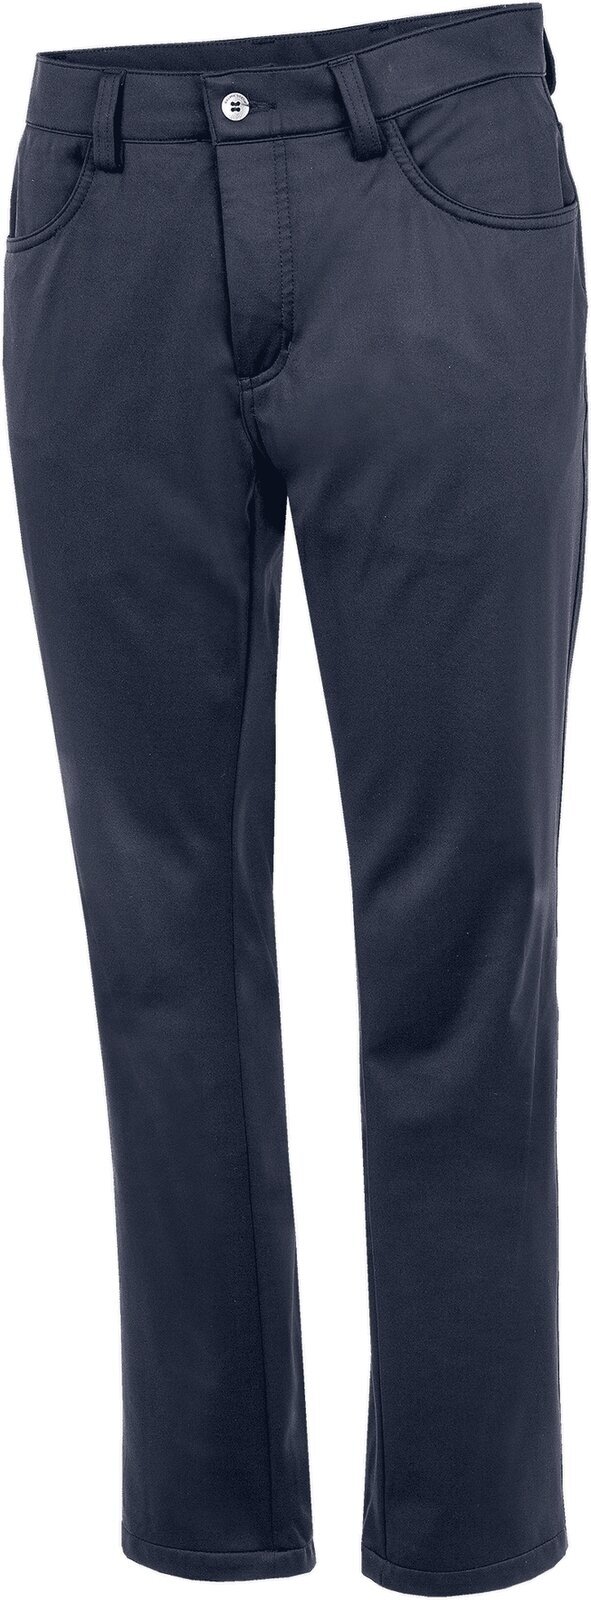 Pantalons Galvin Green Lane MensWindproof And Water Repellent Pants Navy 36/32